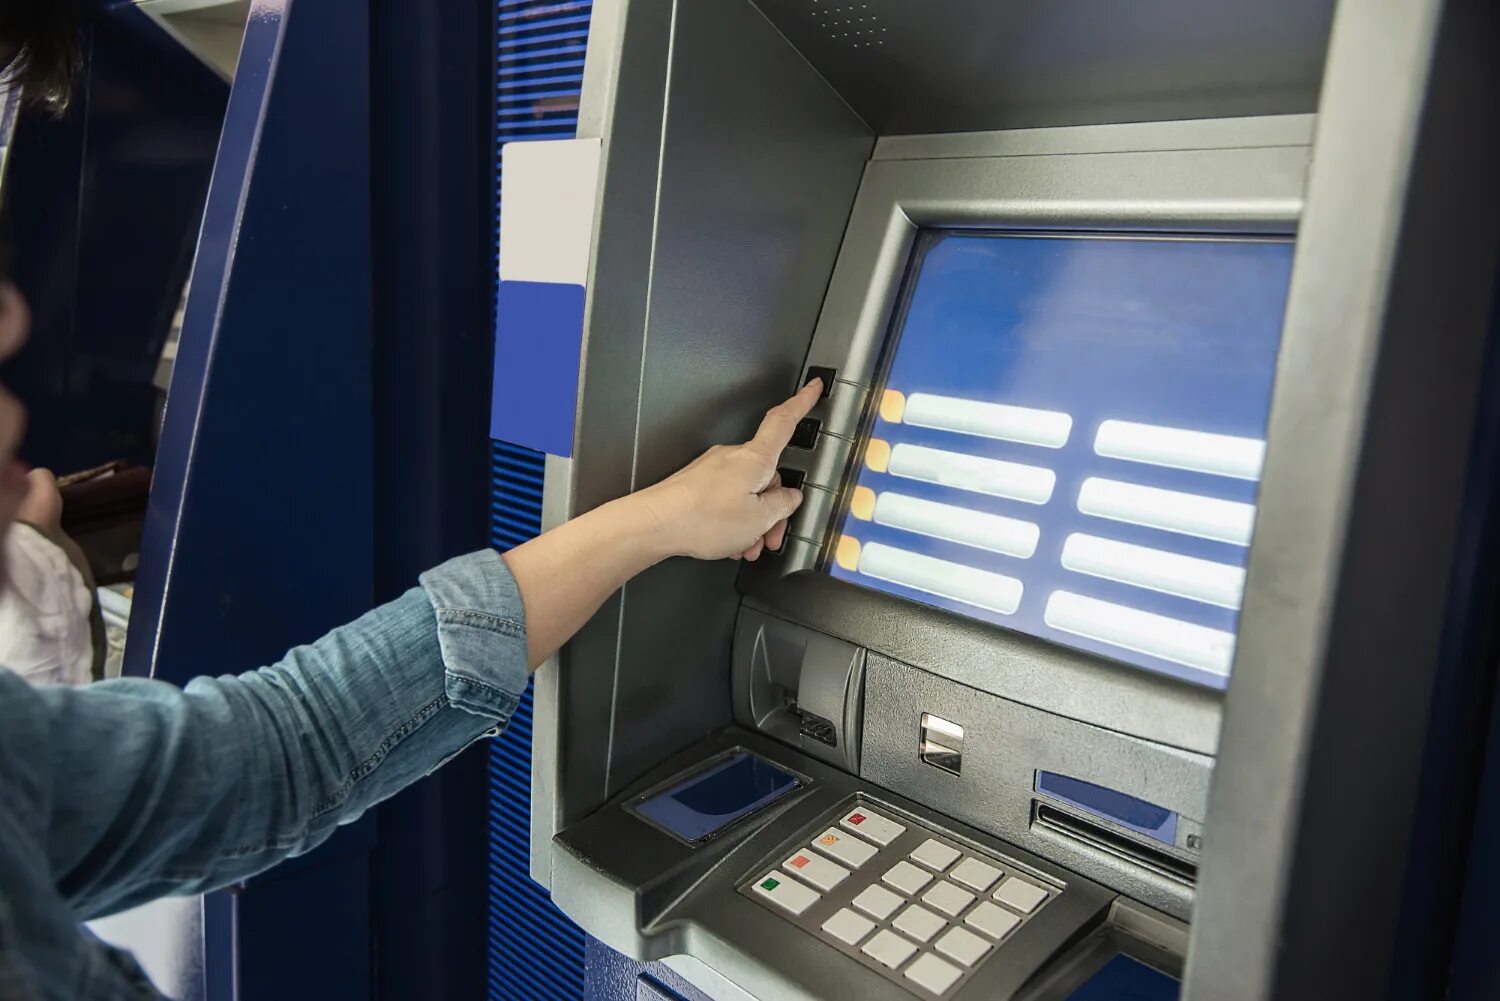 Банкомат. Банкомат (ATM). Терминал банка. Банкомат будущего.